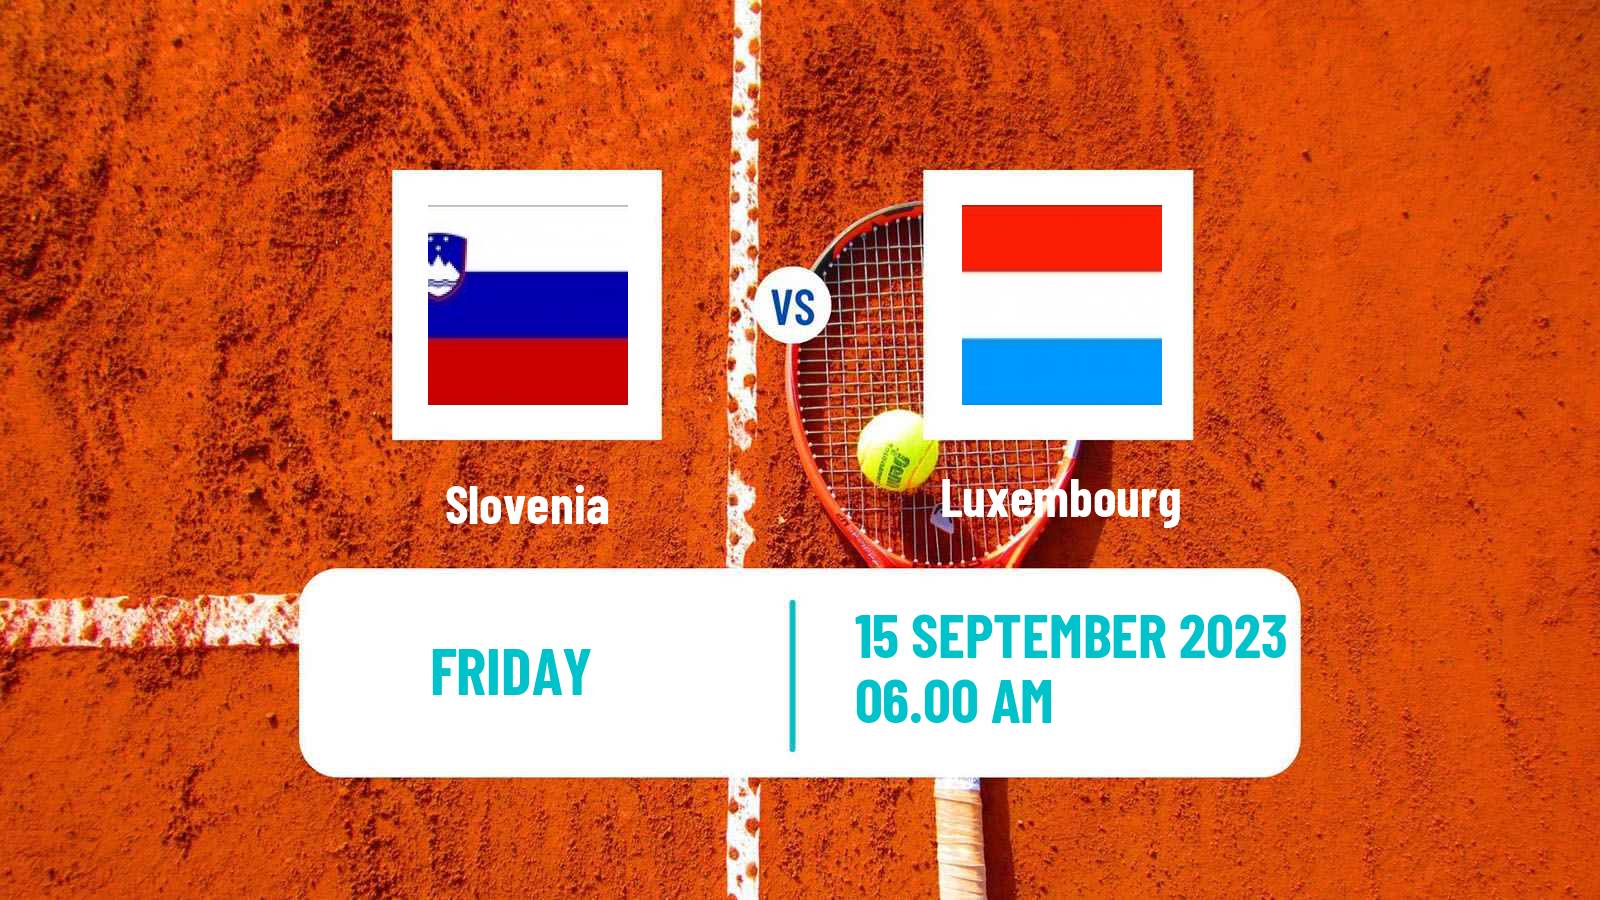 Tennis Davis Cup World Group II Teams Slovenia - Luxembourg